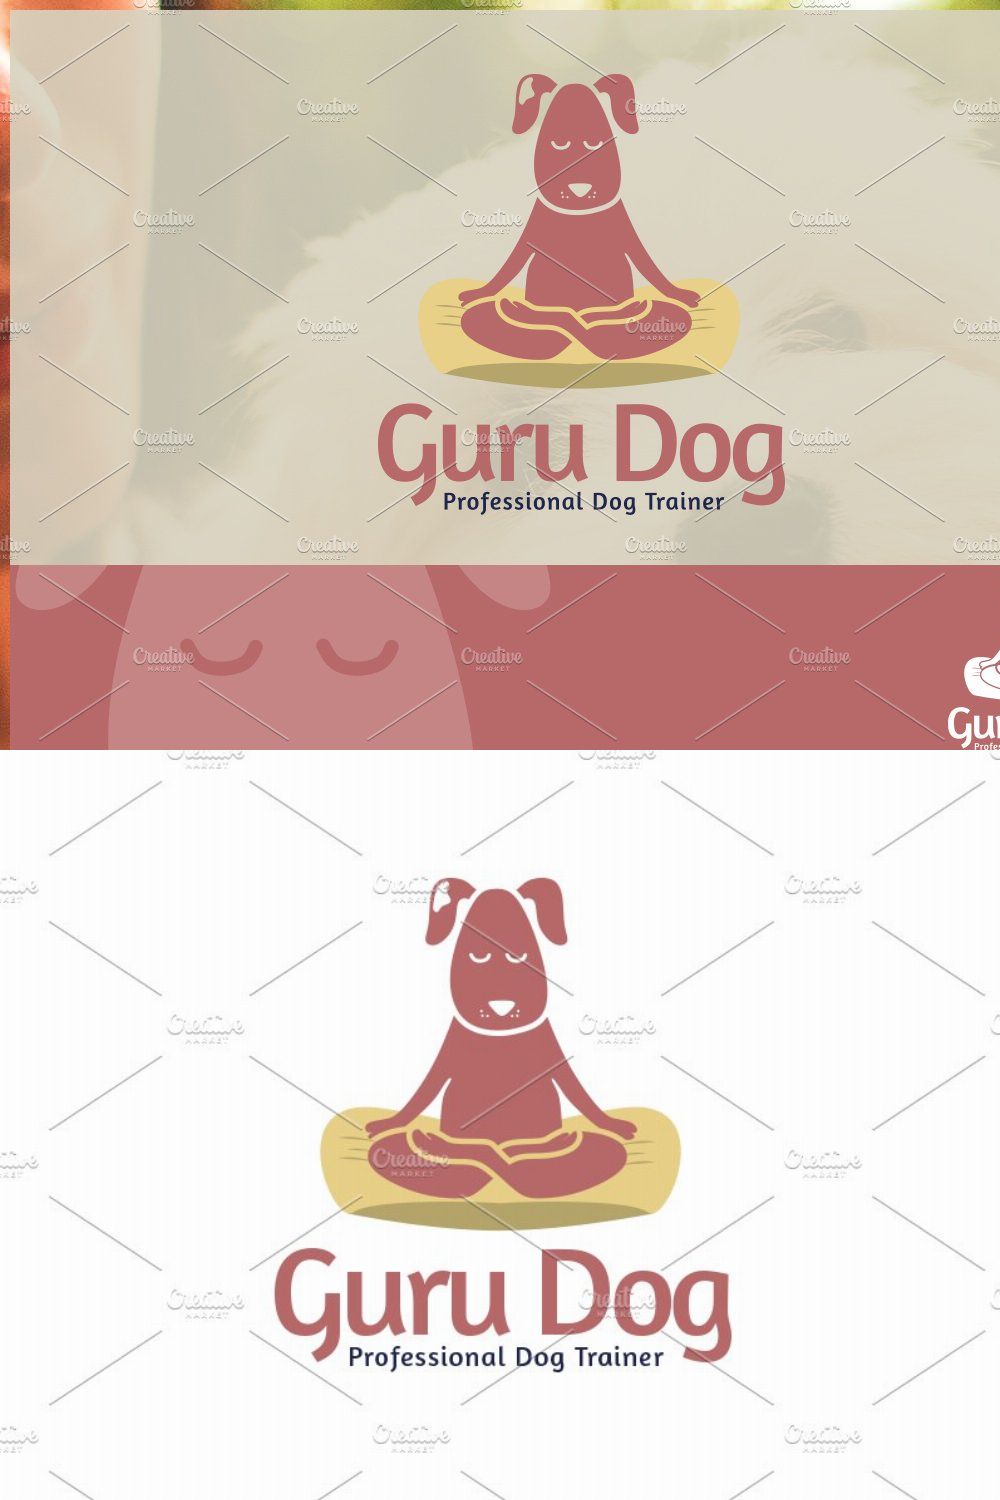 Guru Dog Logo pinterest preview image.